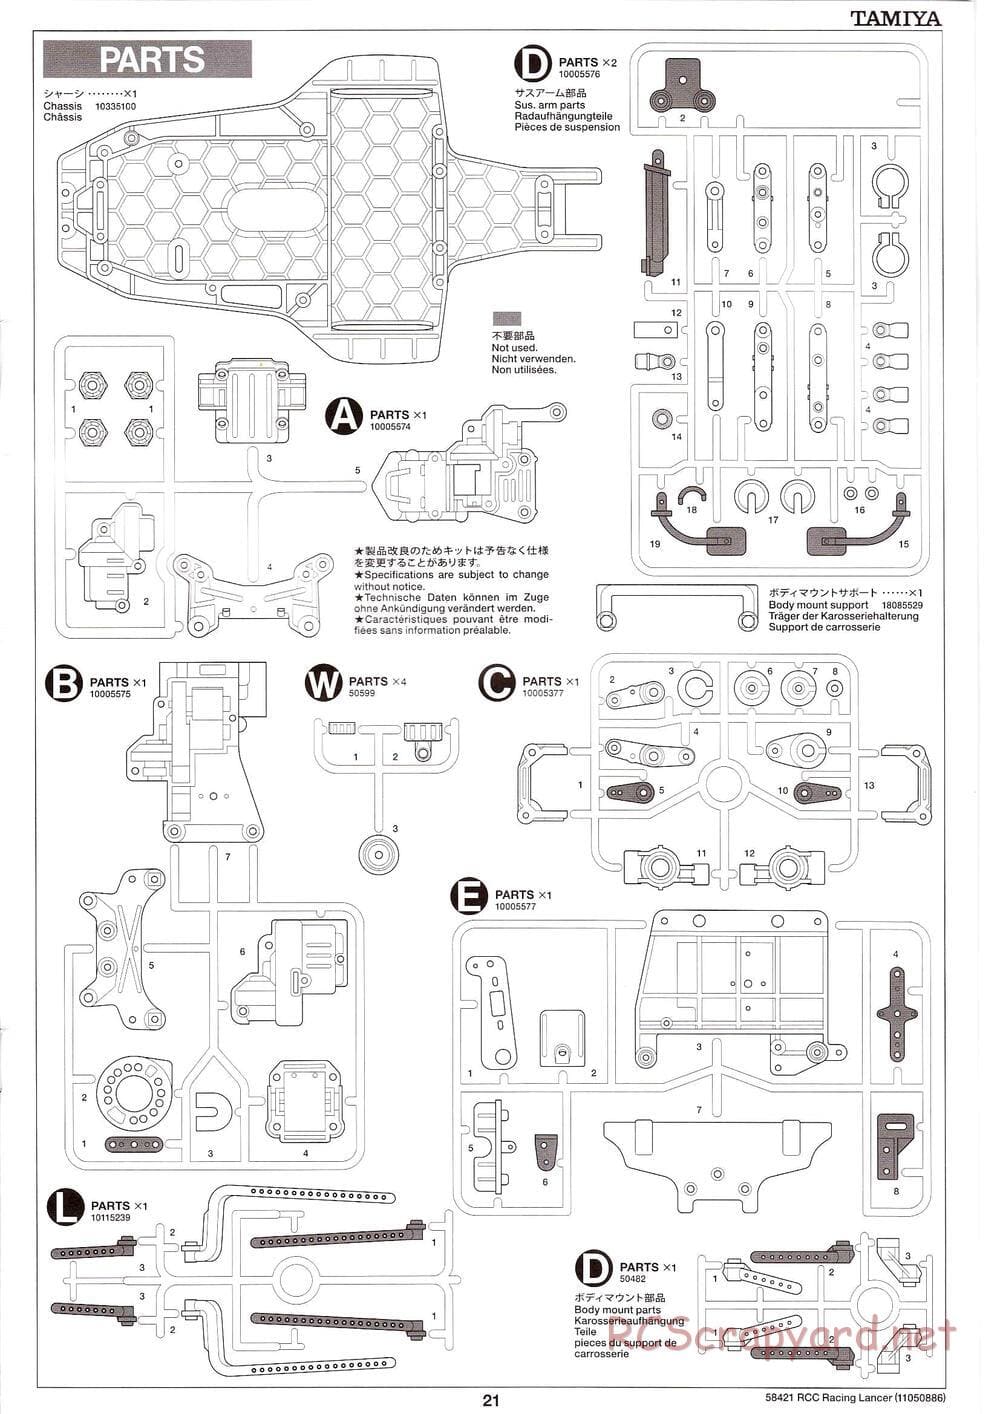 Tamiya - Mitsubishi Racing Lancer - DF-01 Chassis - Manual - Page 21